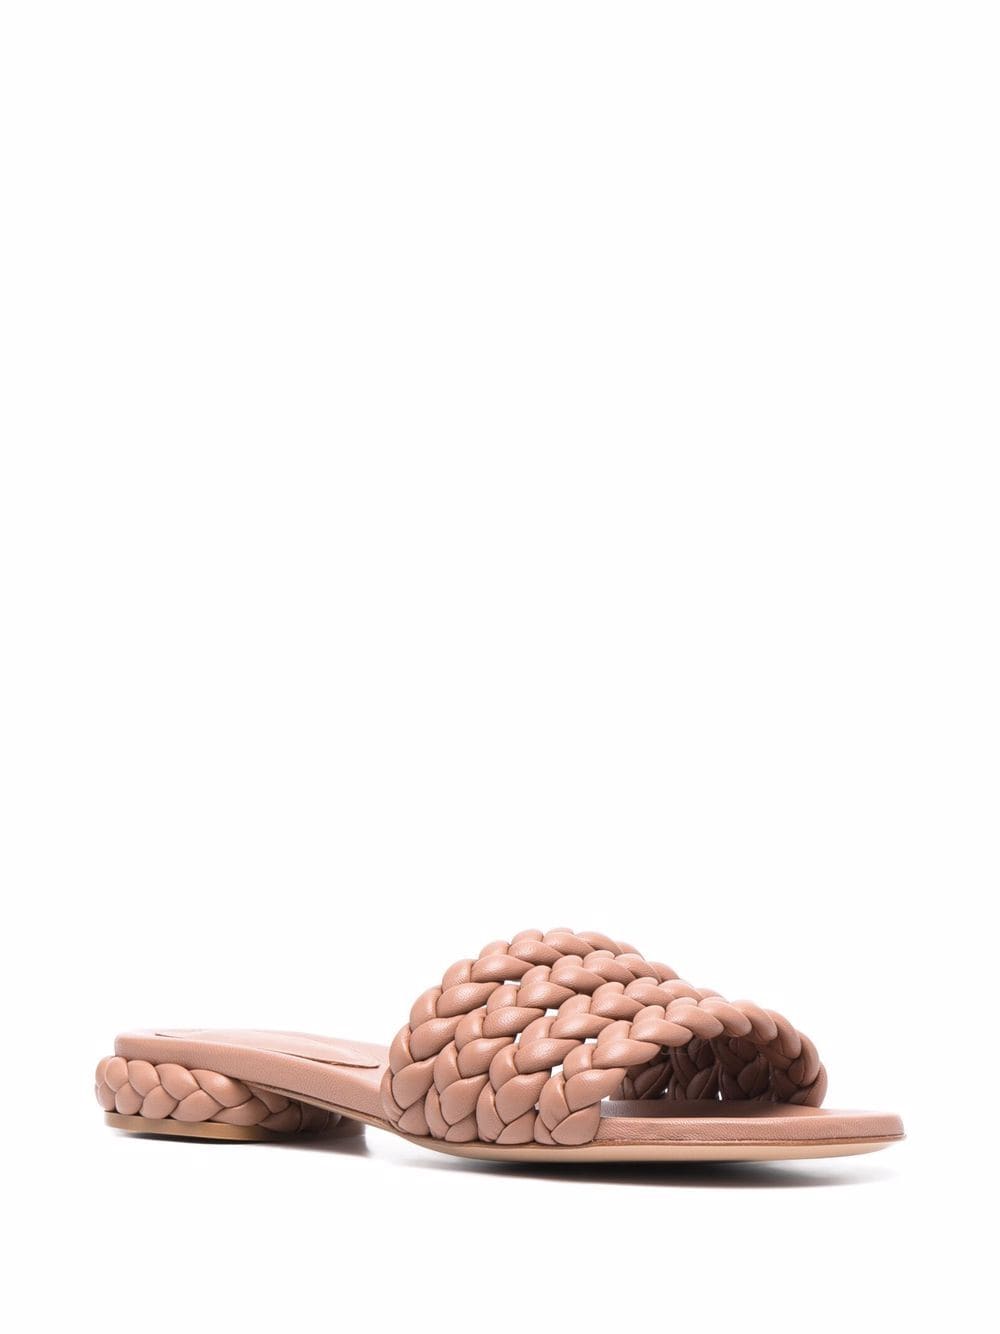 фото Gianvito rossi сандалии с плетеными ремешками